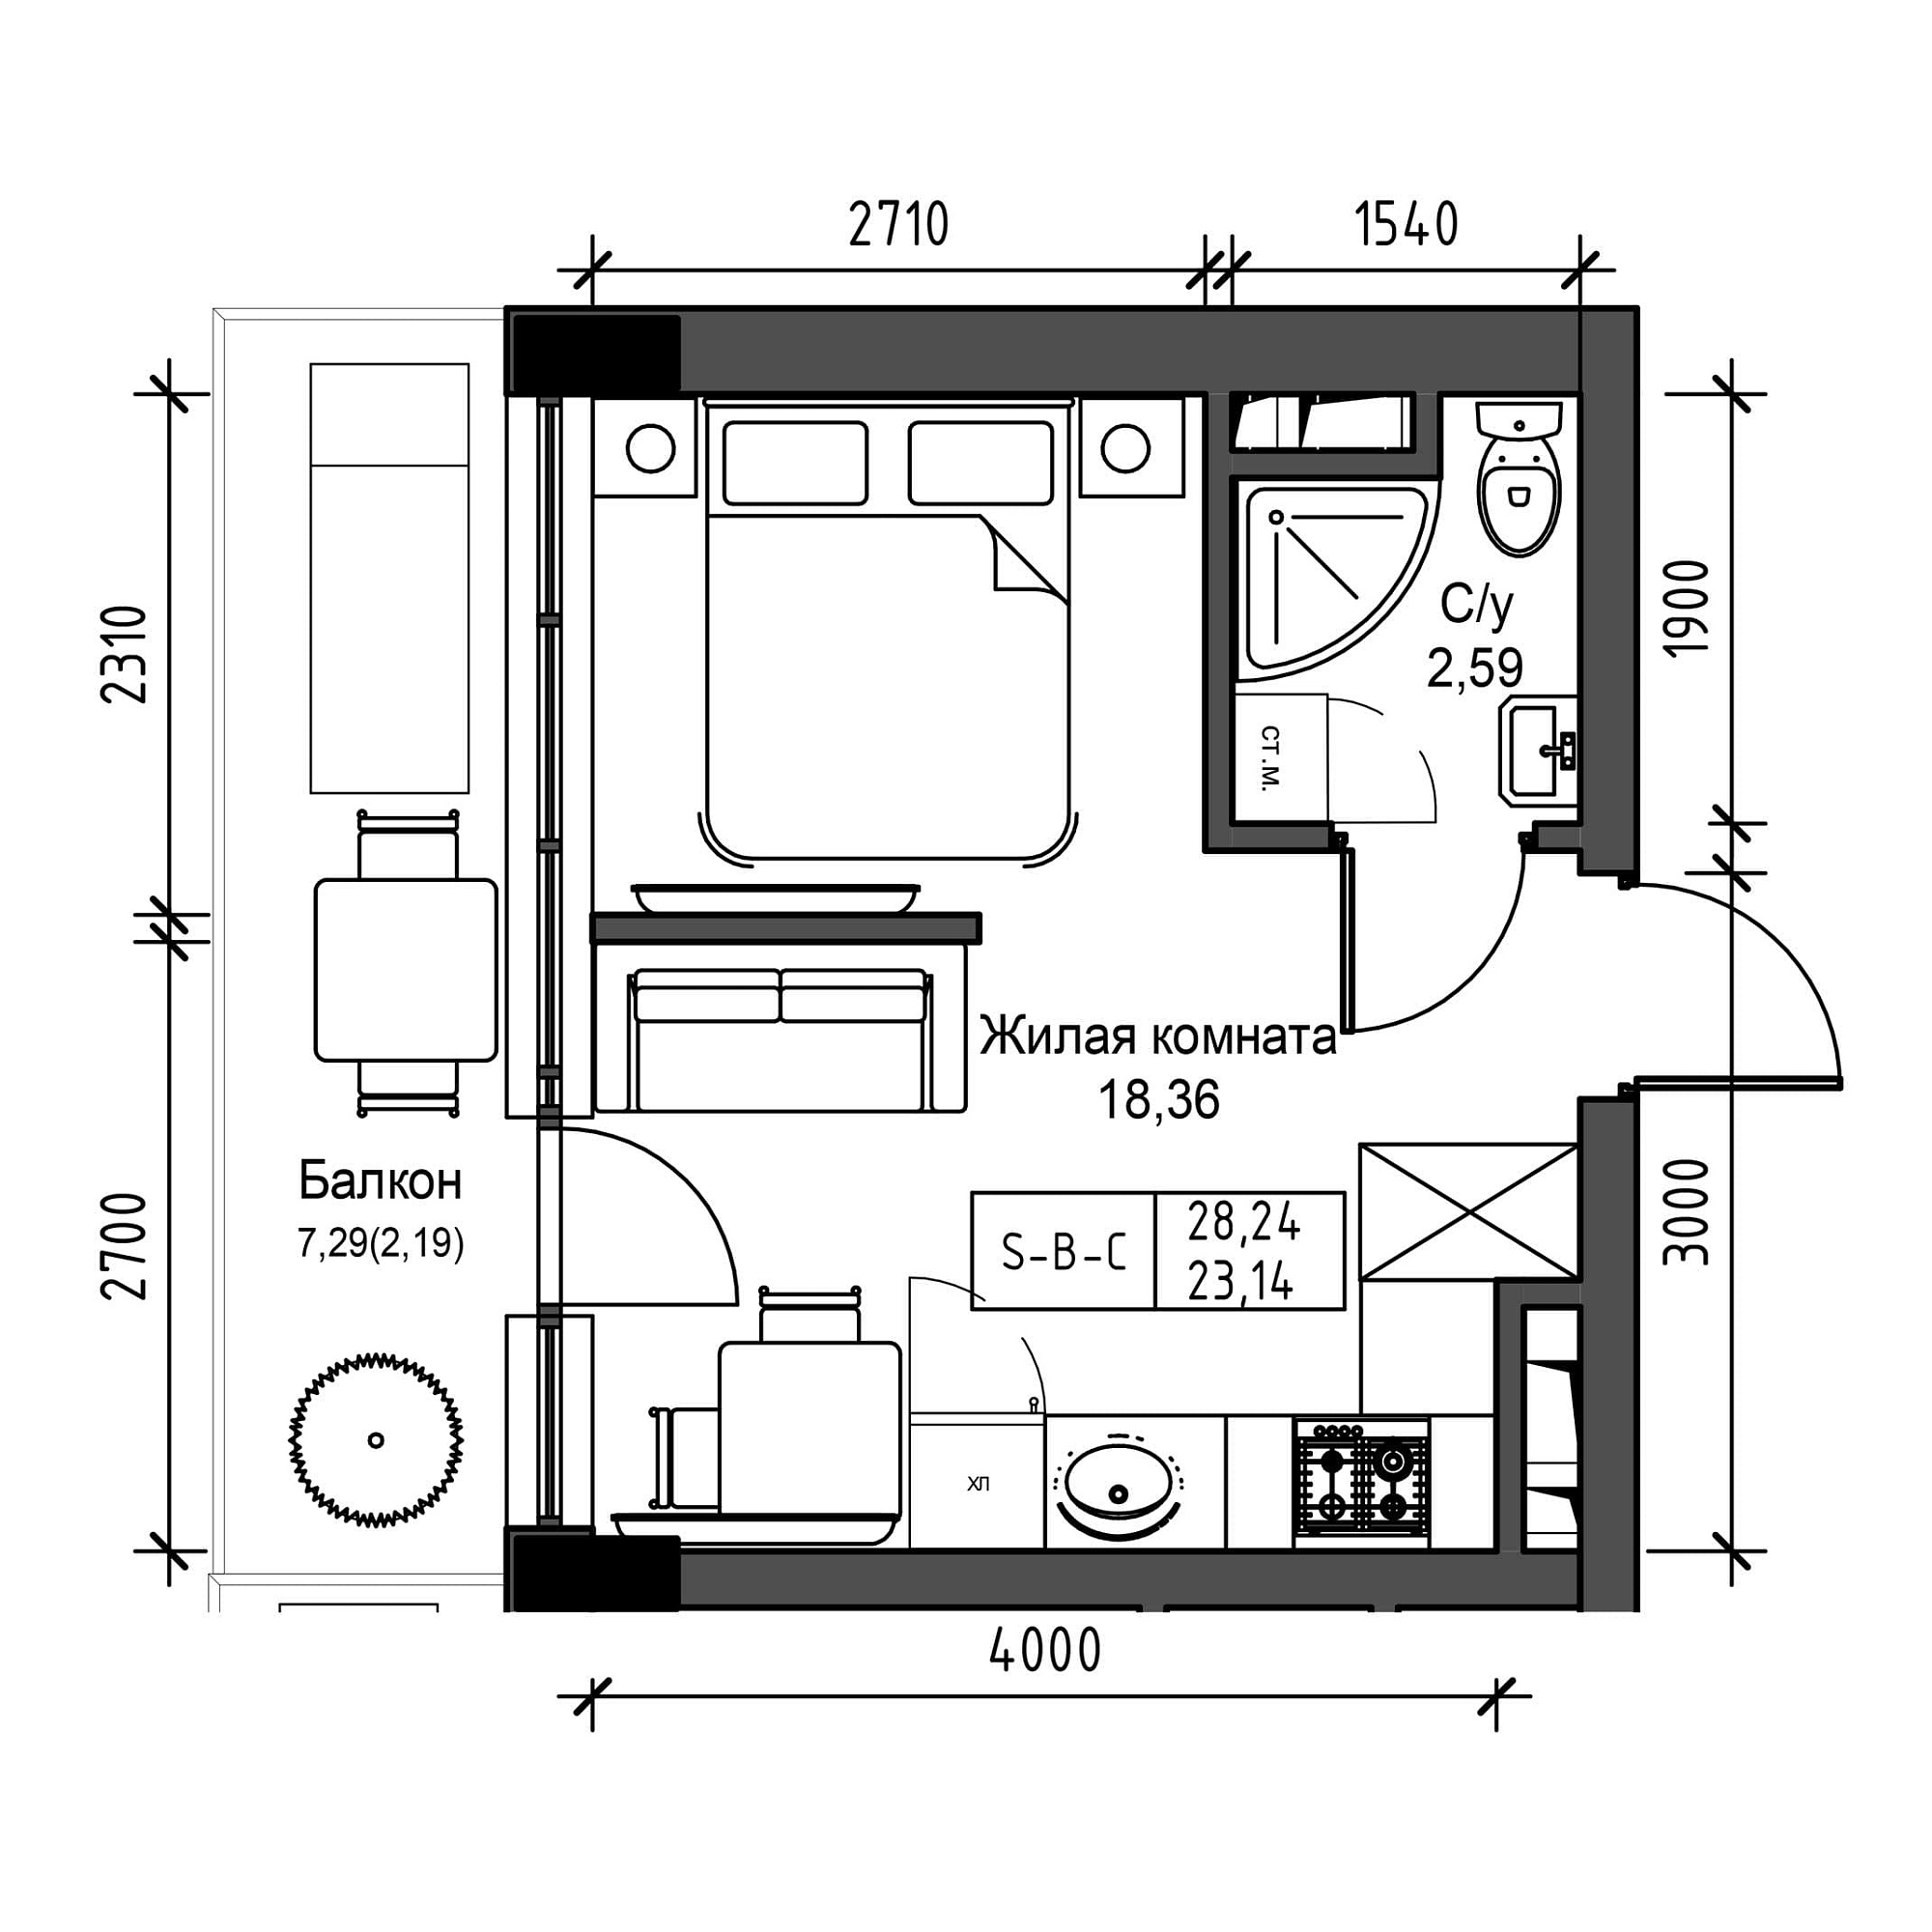 Planning Smart flats area 23.14m2, UM-001-08/0013.